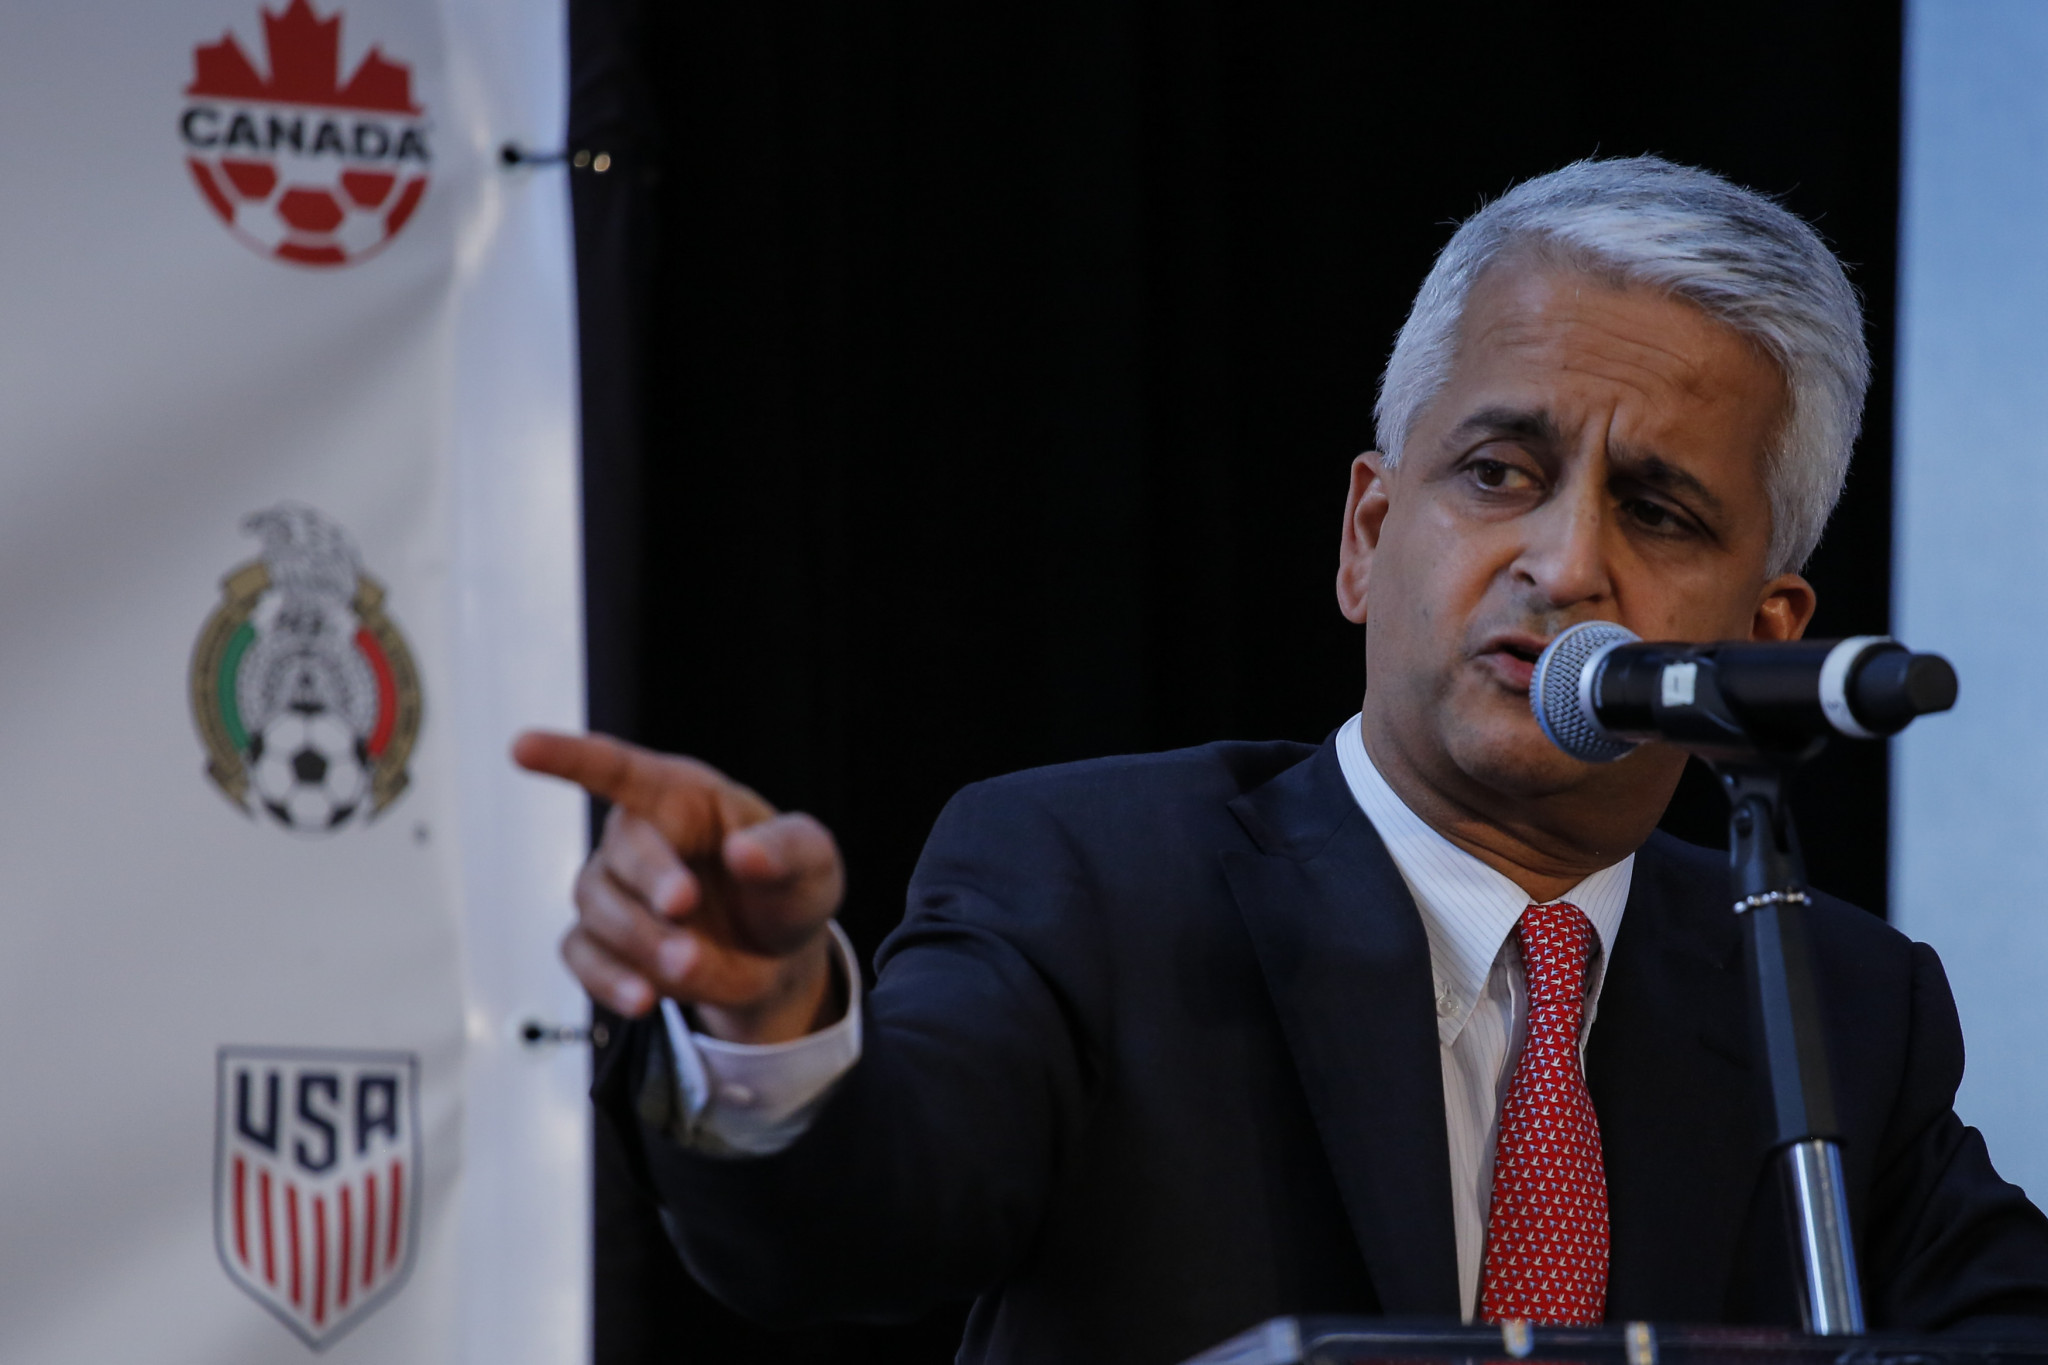 Carlos Cordeiro succeeds Sunil Gulati as U.S. Soccer President ©Getty Images